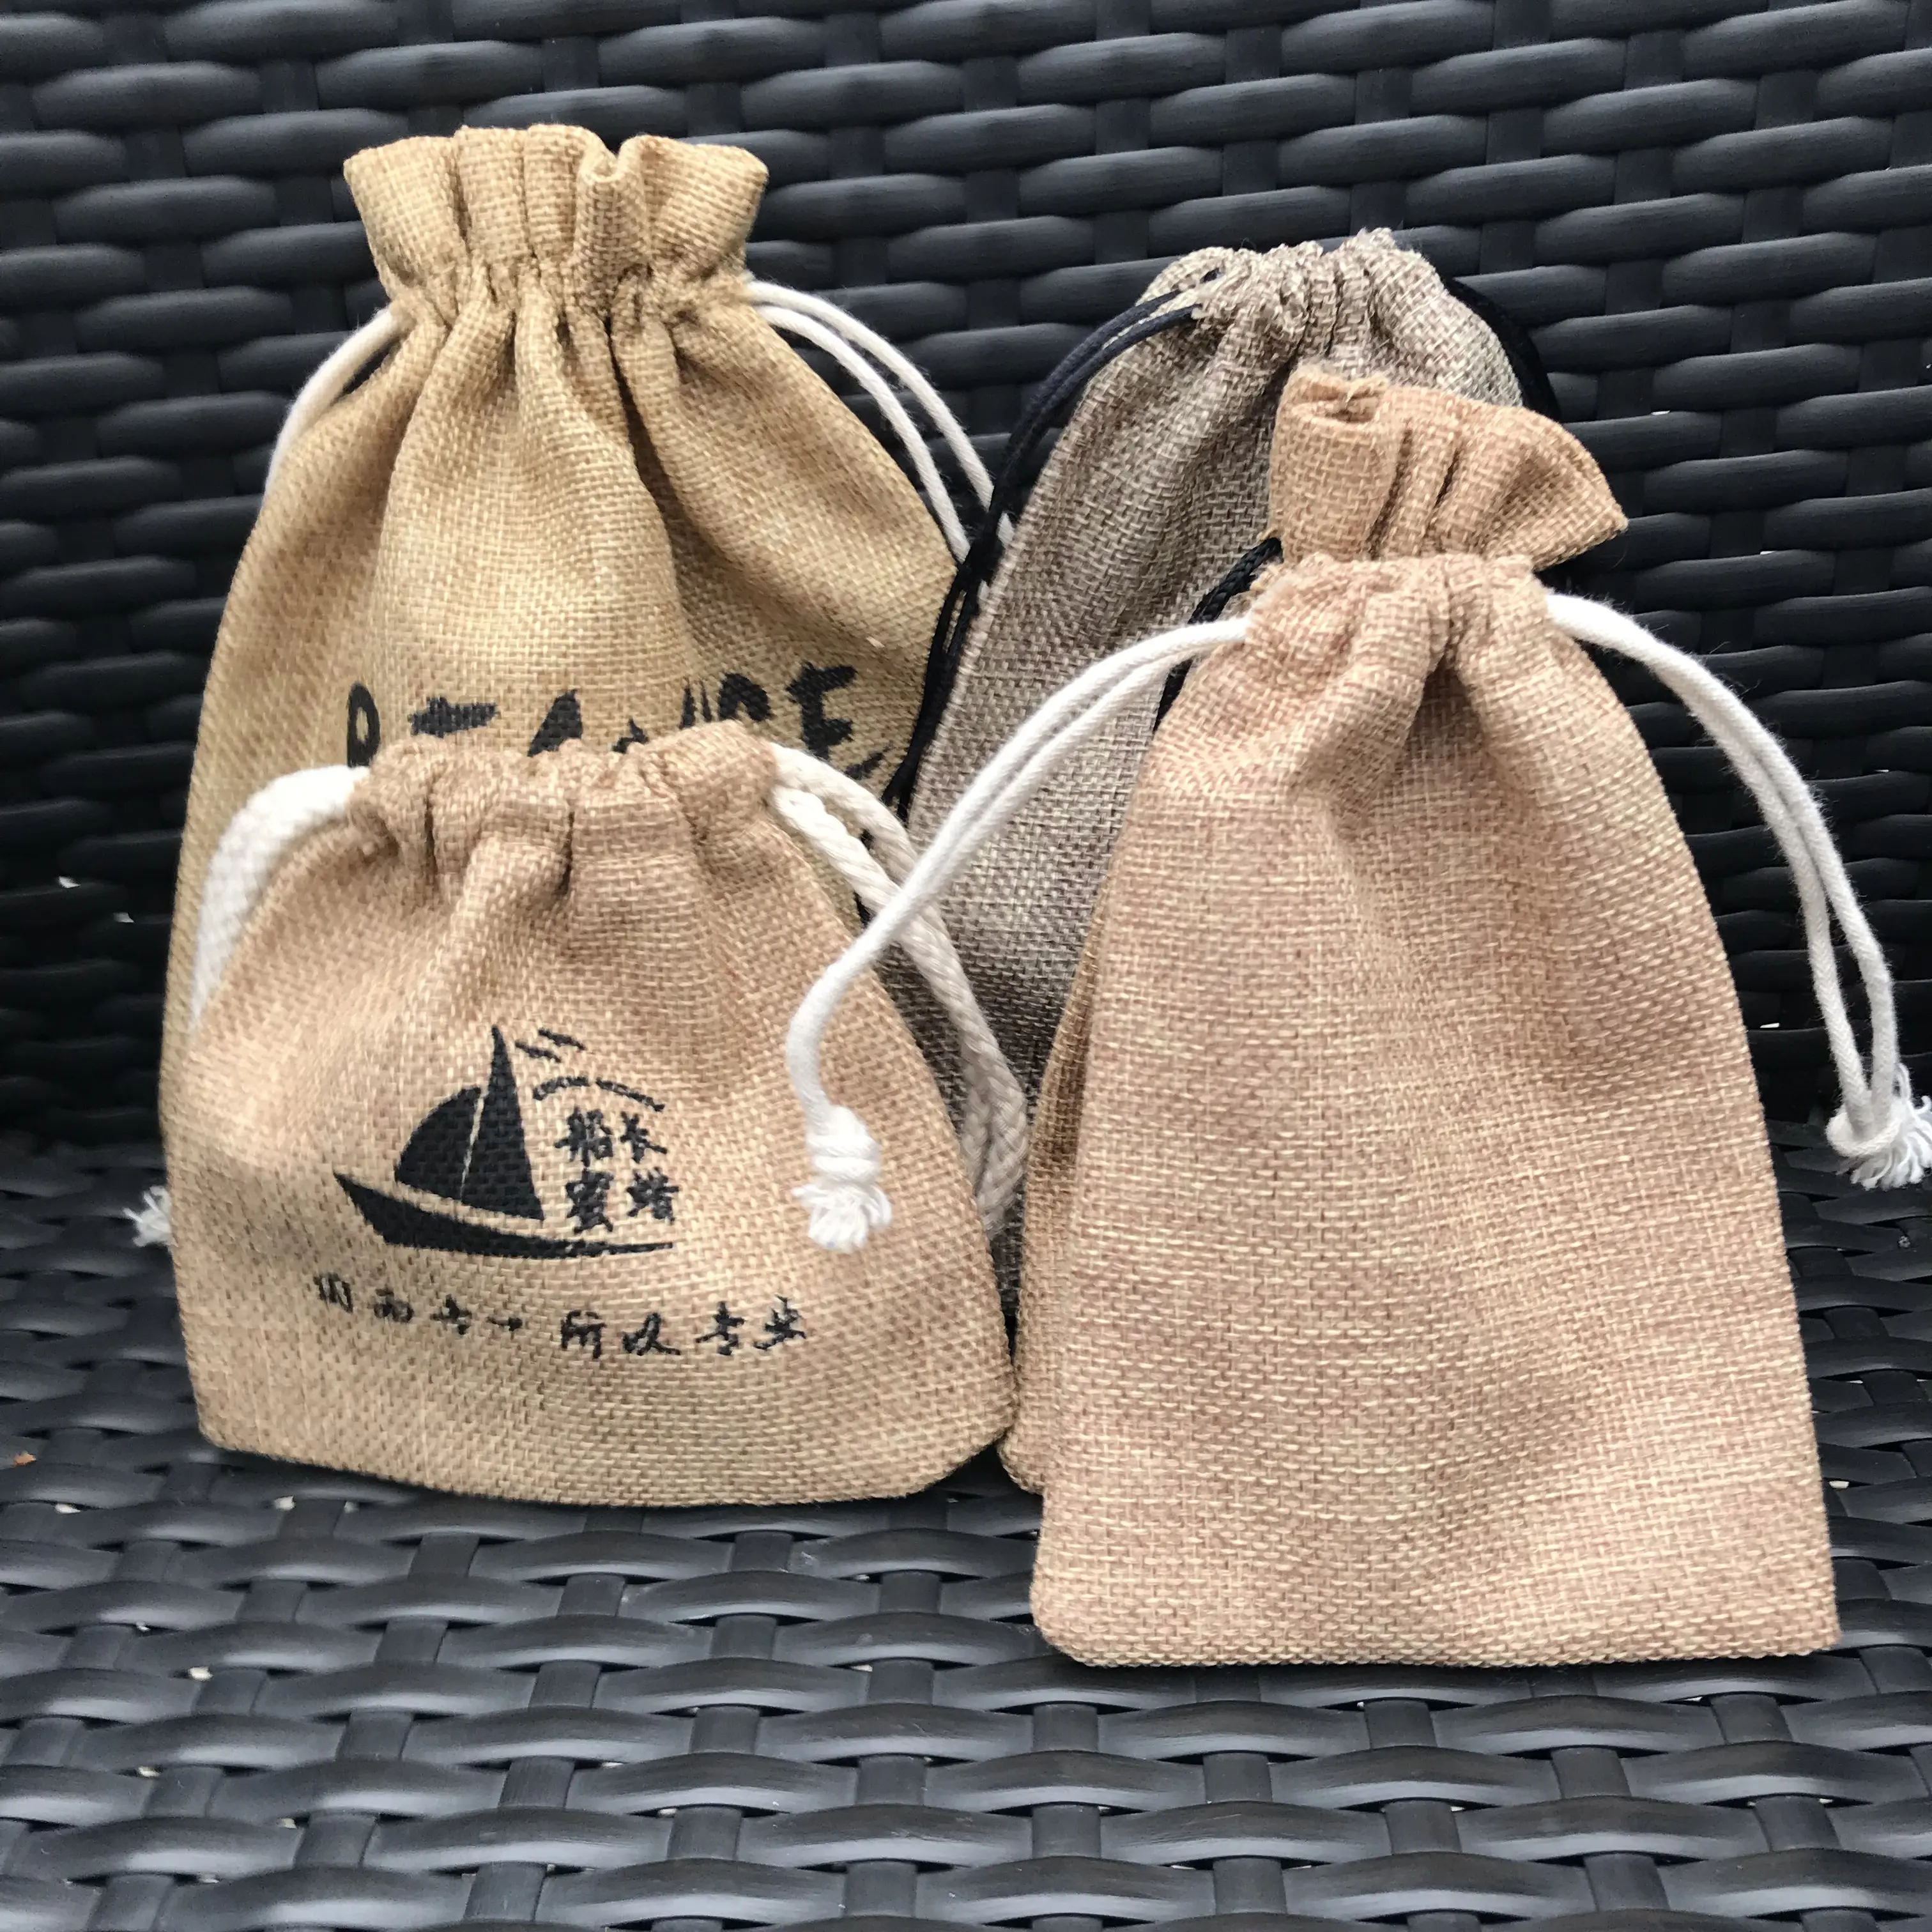 Bolsa de arpillera de yute para botella de vino, bolsa ecológica con estampado personalizado, con cordón